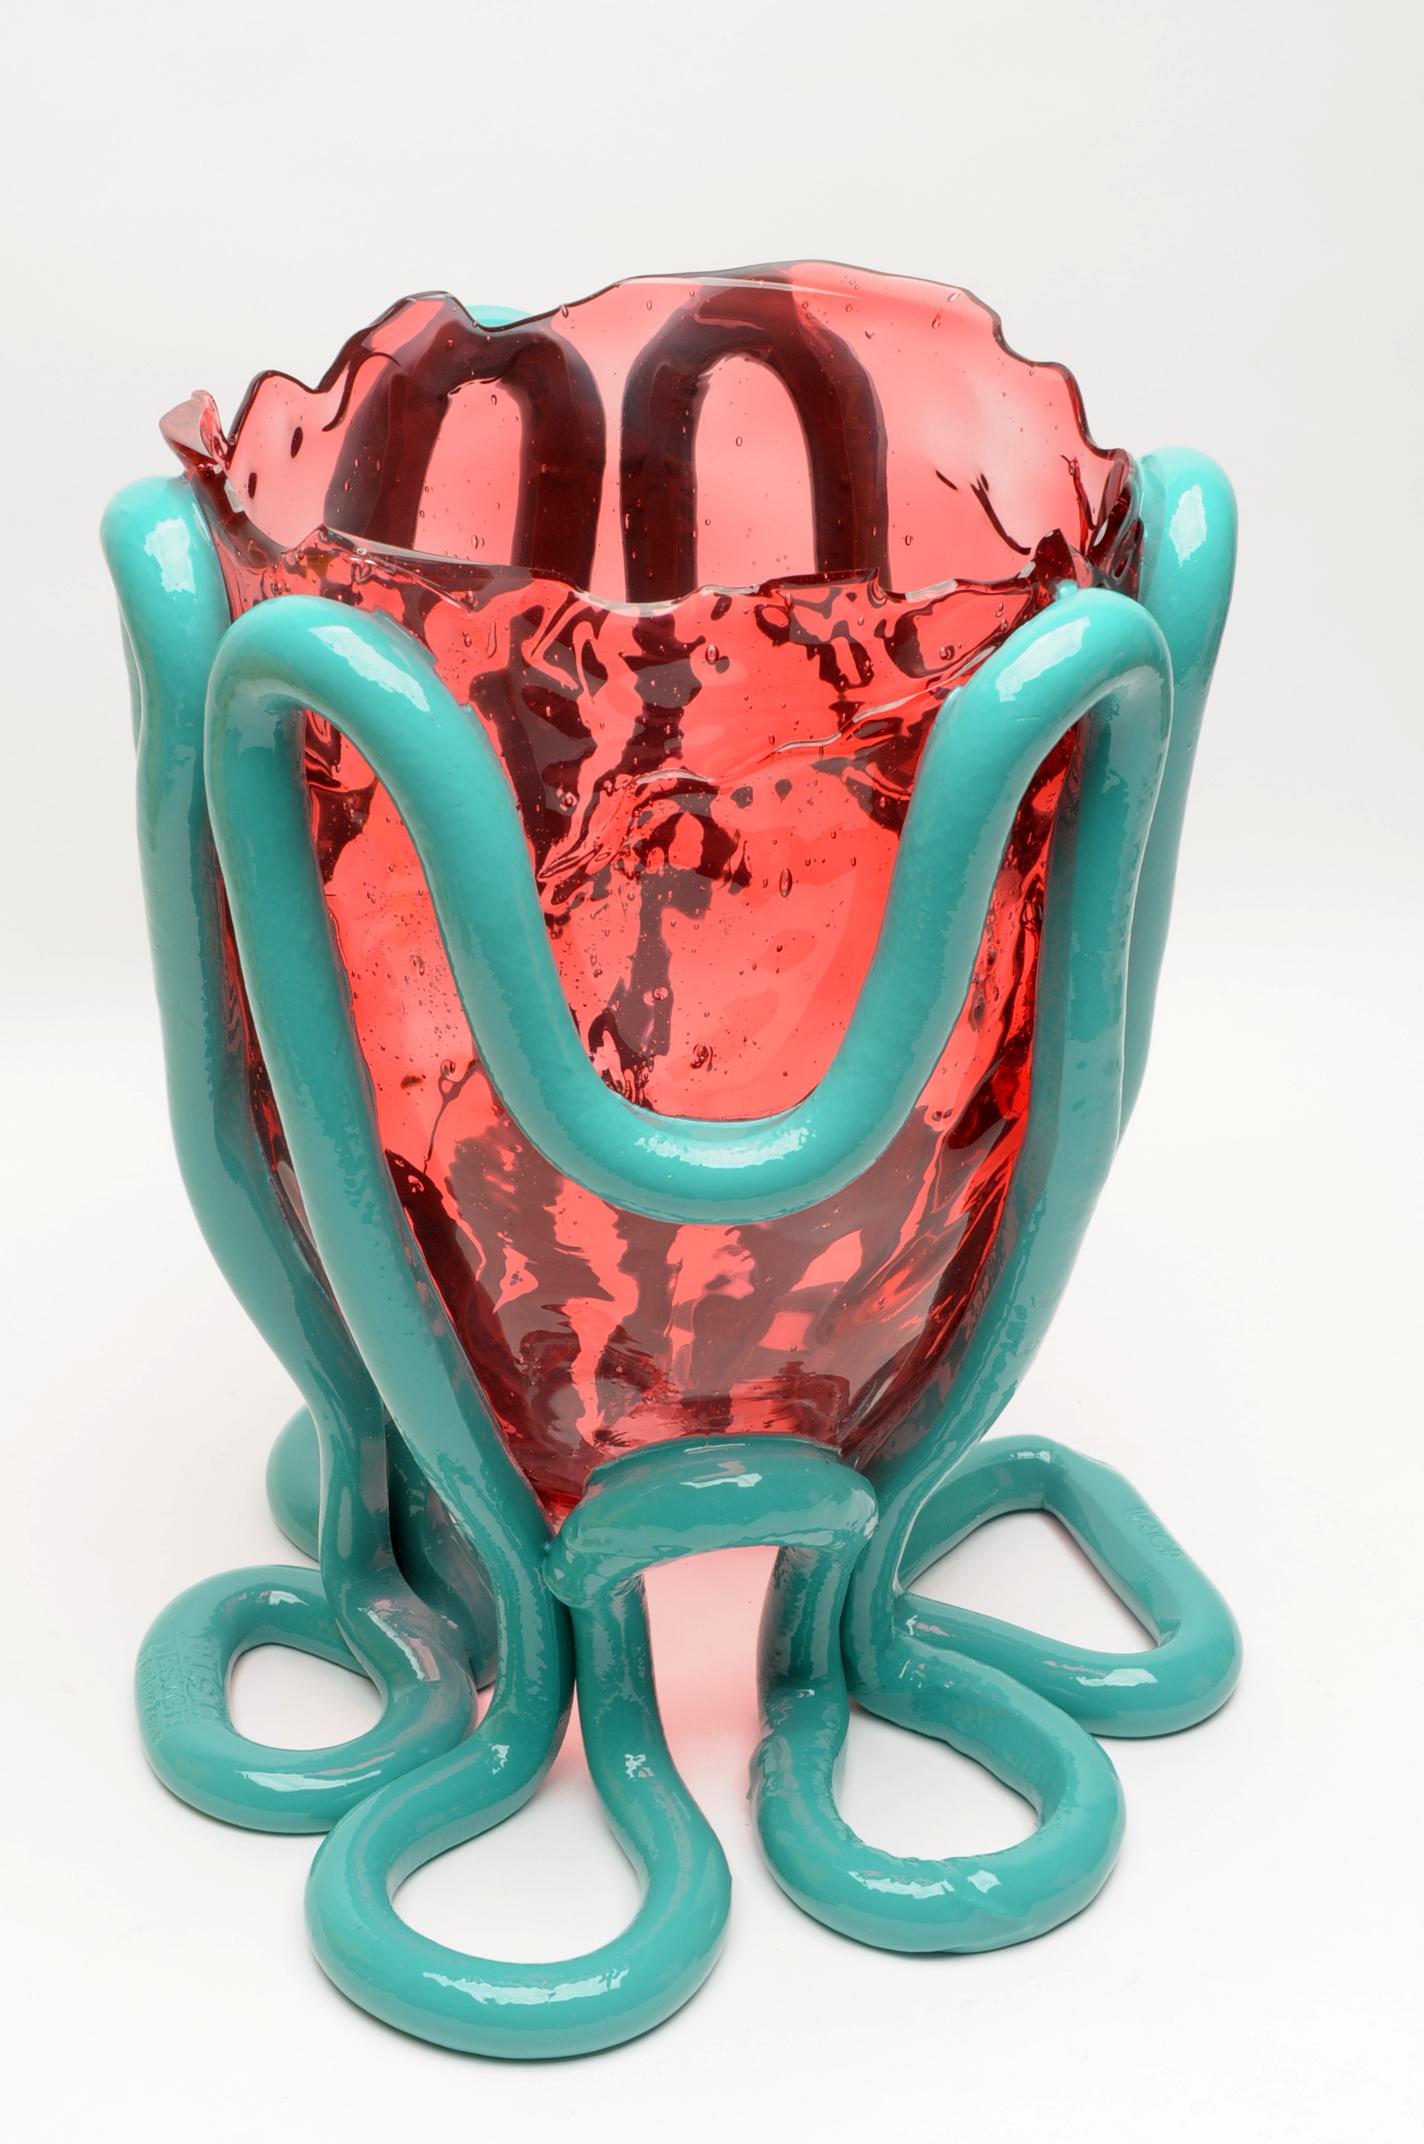 Italian Contemporary Gaetano Pesce Indian Summer L Vase Soft Resin Fuchsia Ocean Blue For Sale